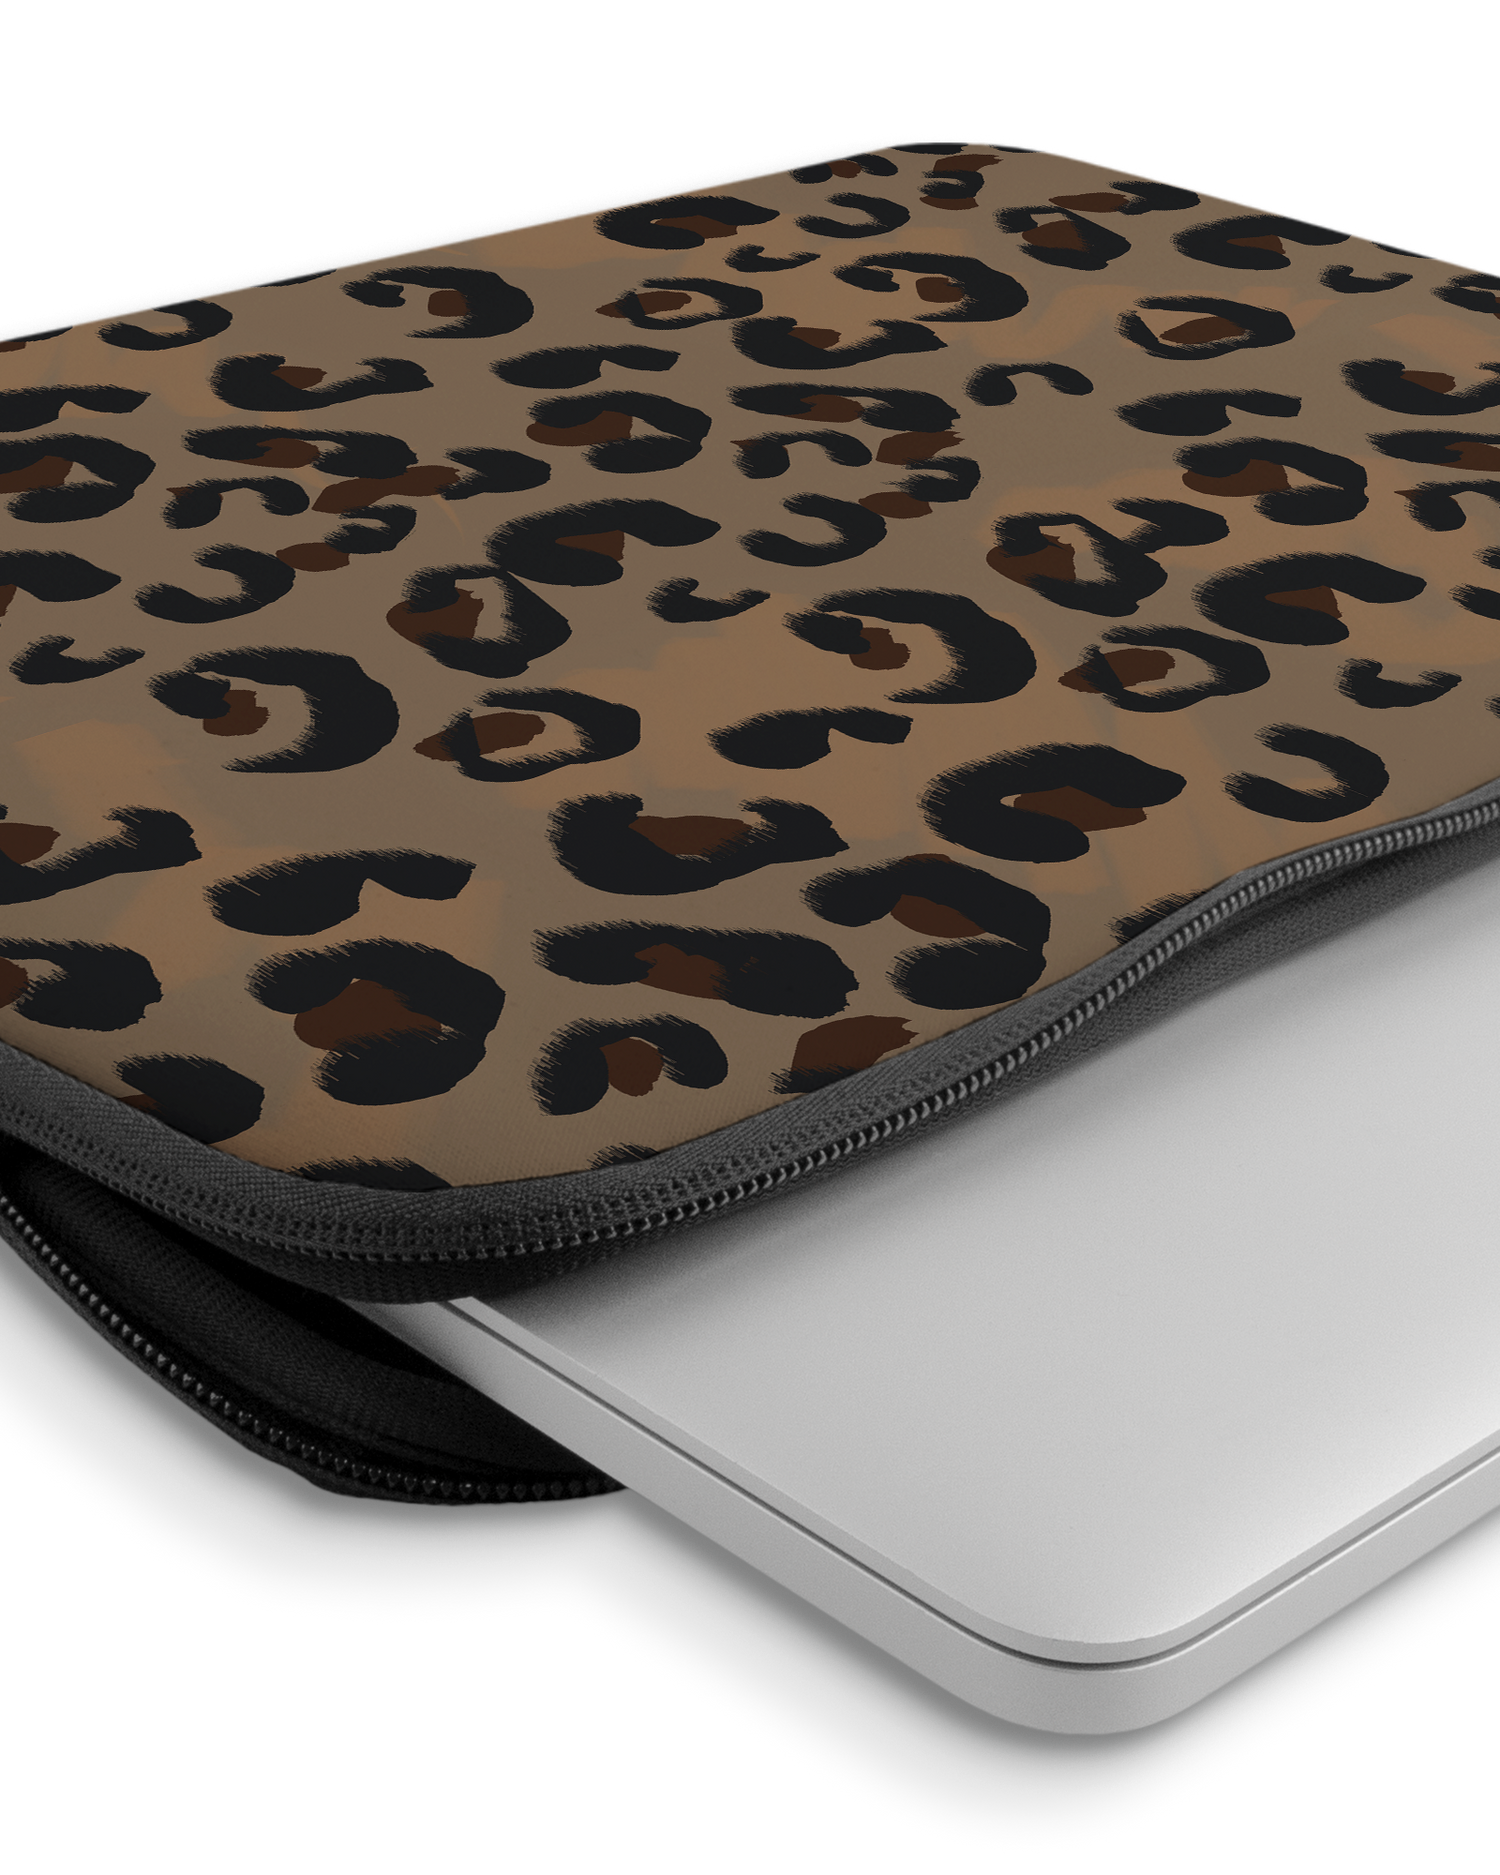 Leopard Repeat Laptophülle 14-15 Zoll mit Gerät im Inneren